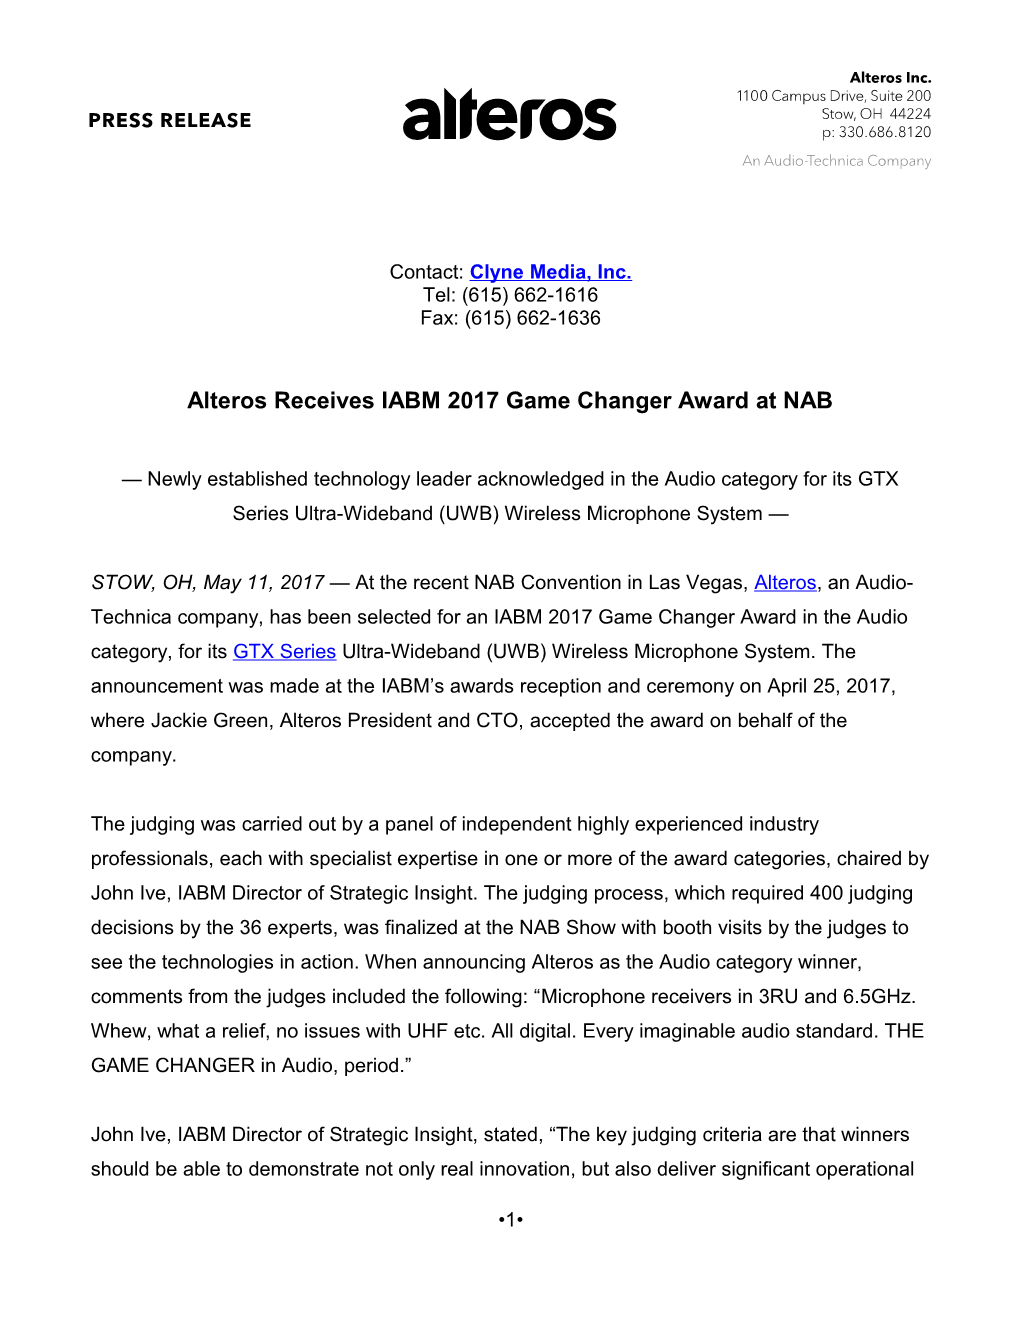 Alterosreceives IABM 2017 Game Changer Award at NAB